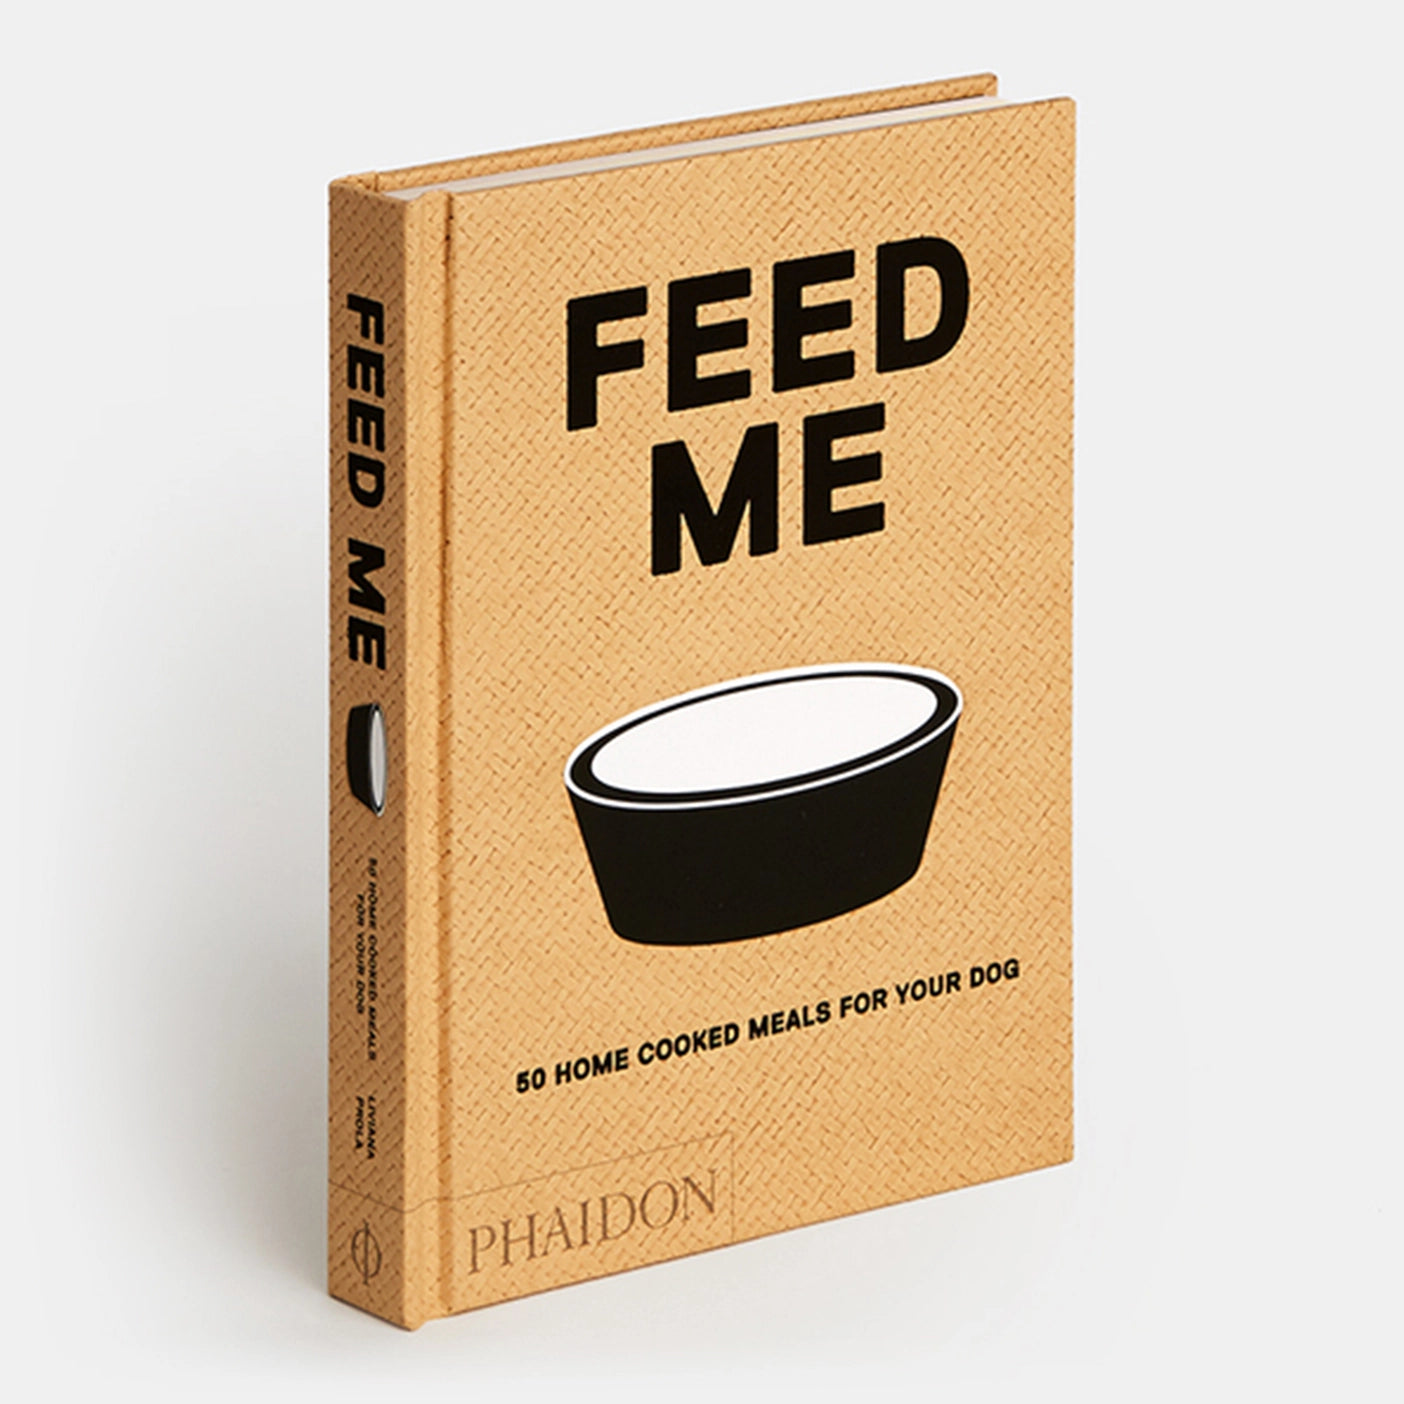 Livre "FEED ME"